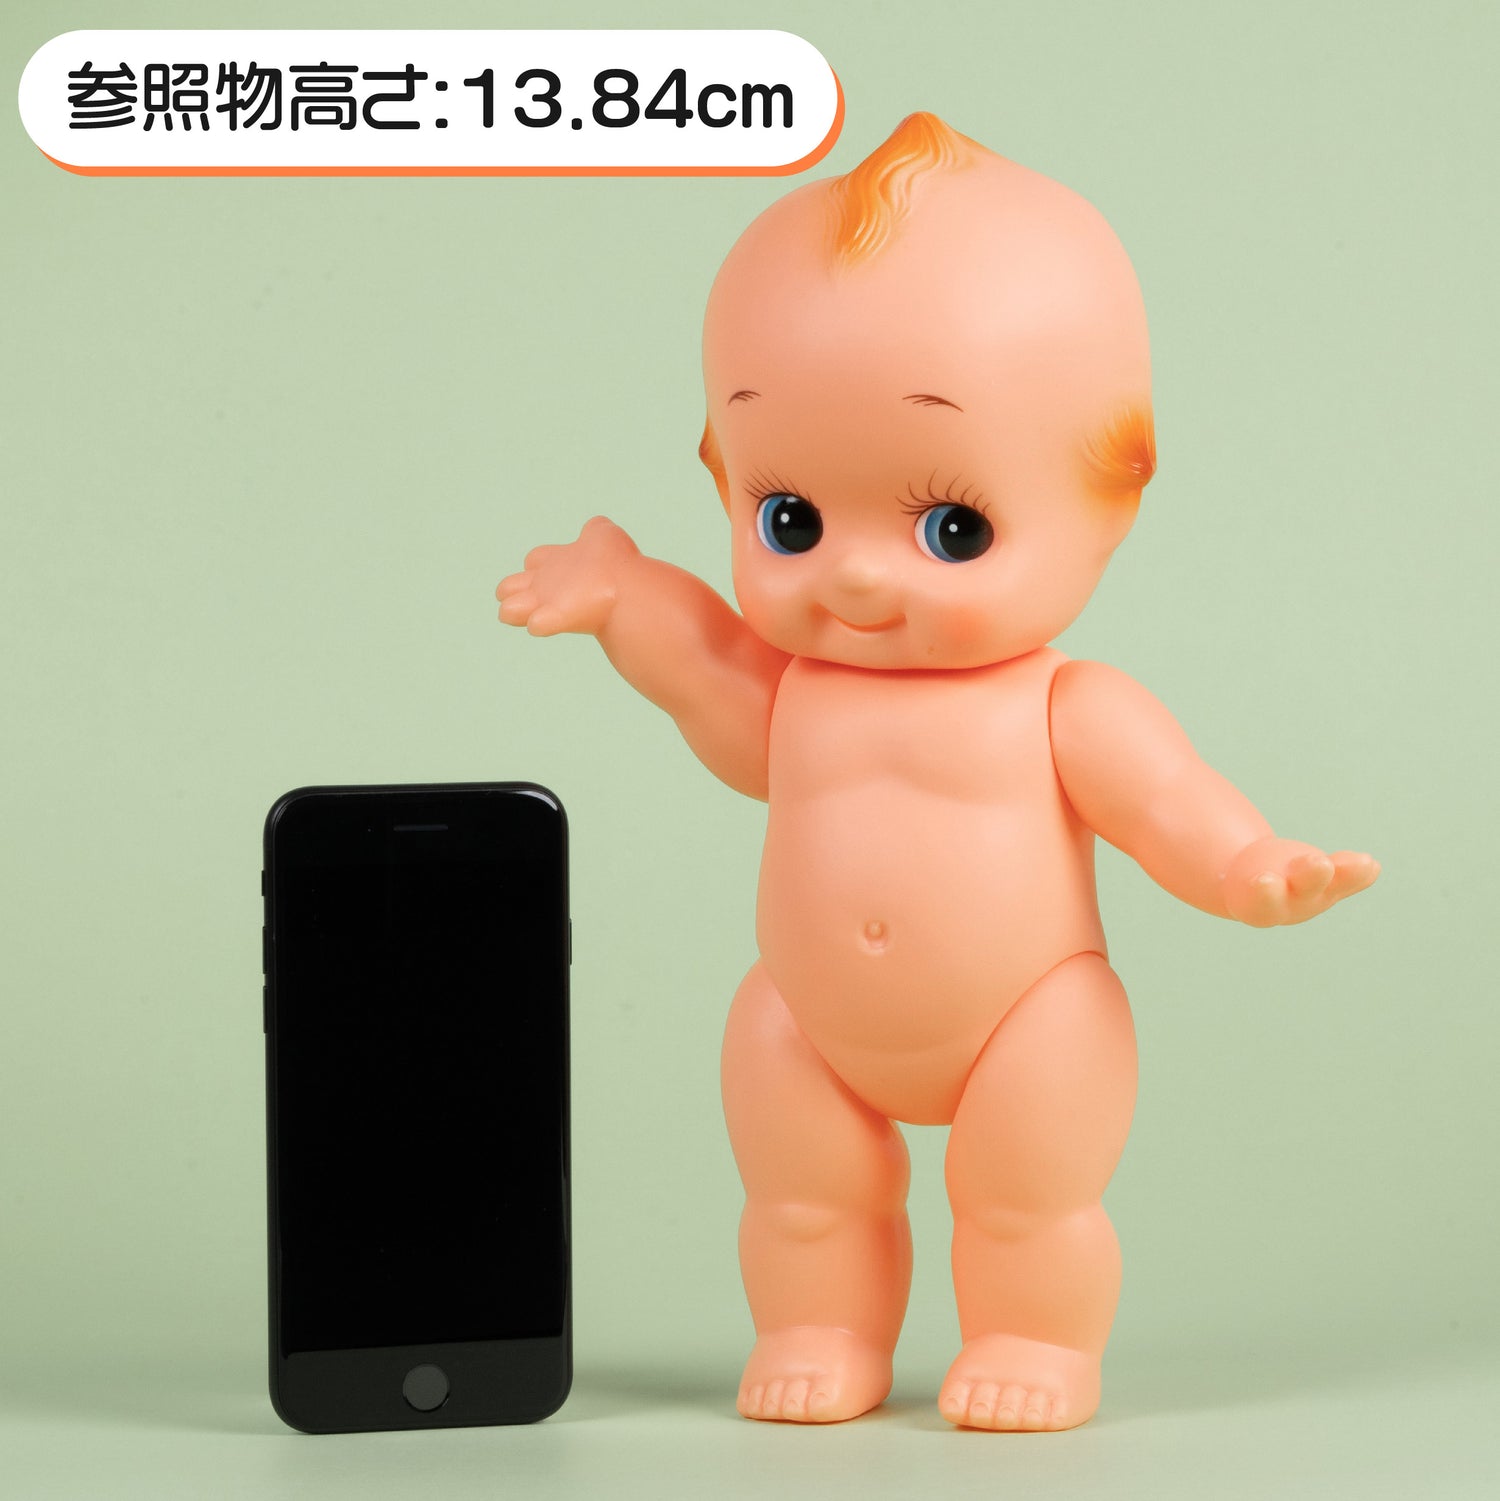 28cm Obitsu Kewpie Doll